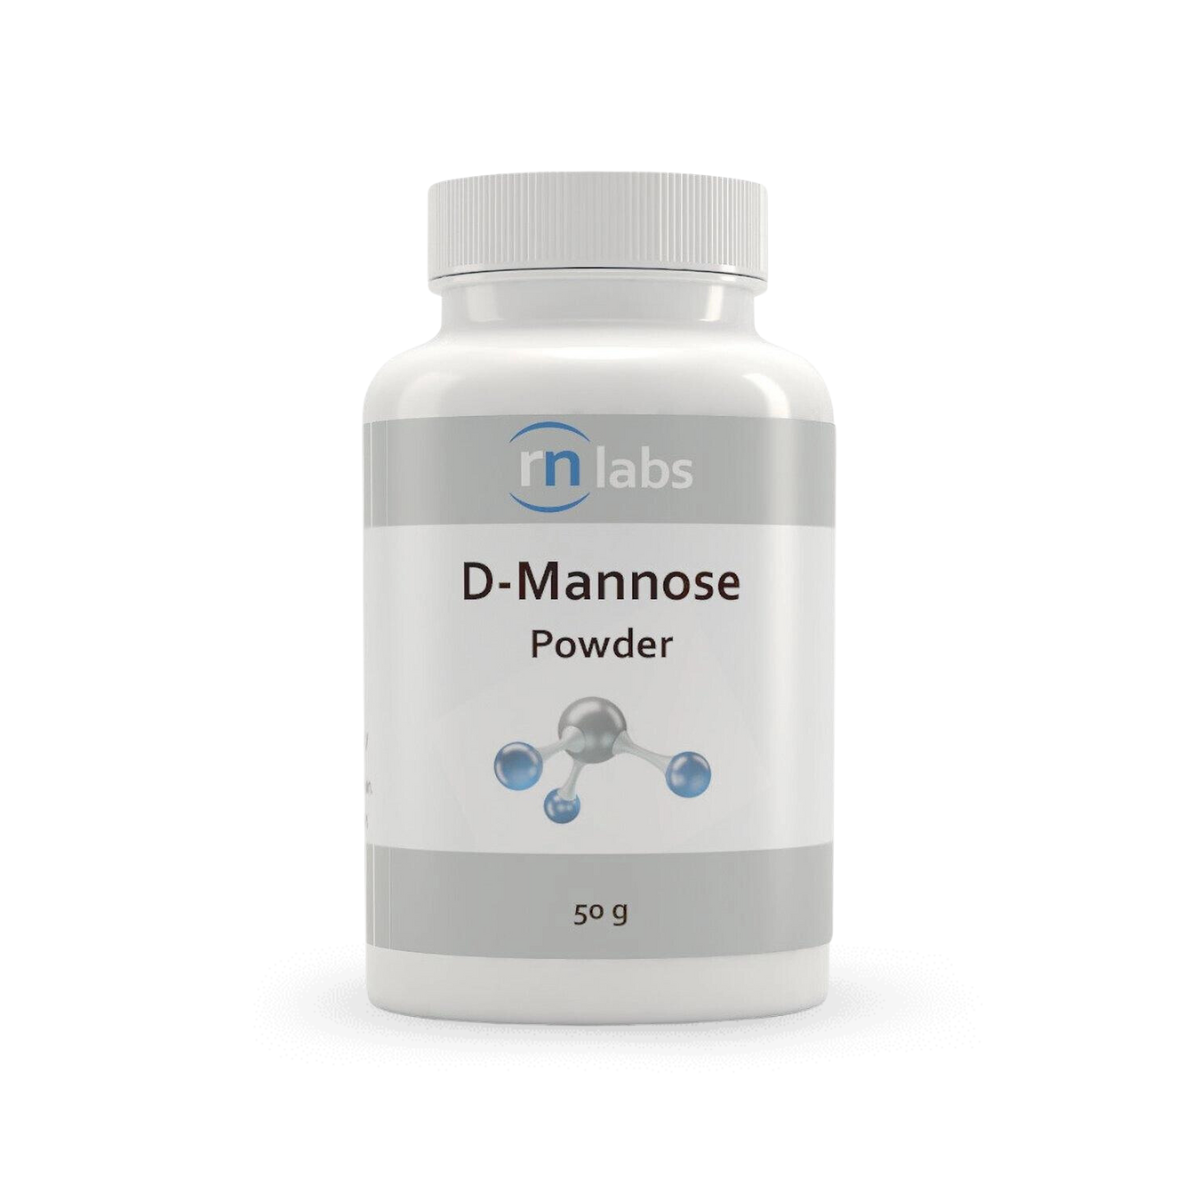   RN Labs D-Mannose Powder 50g